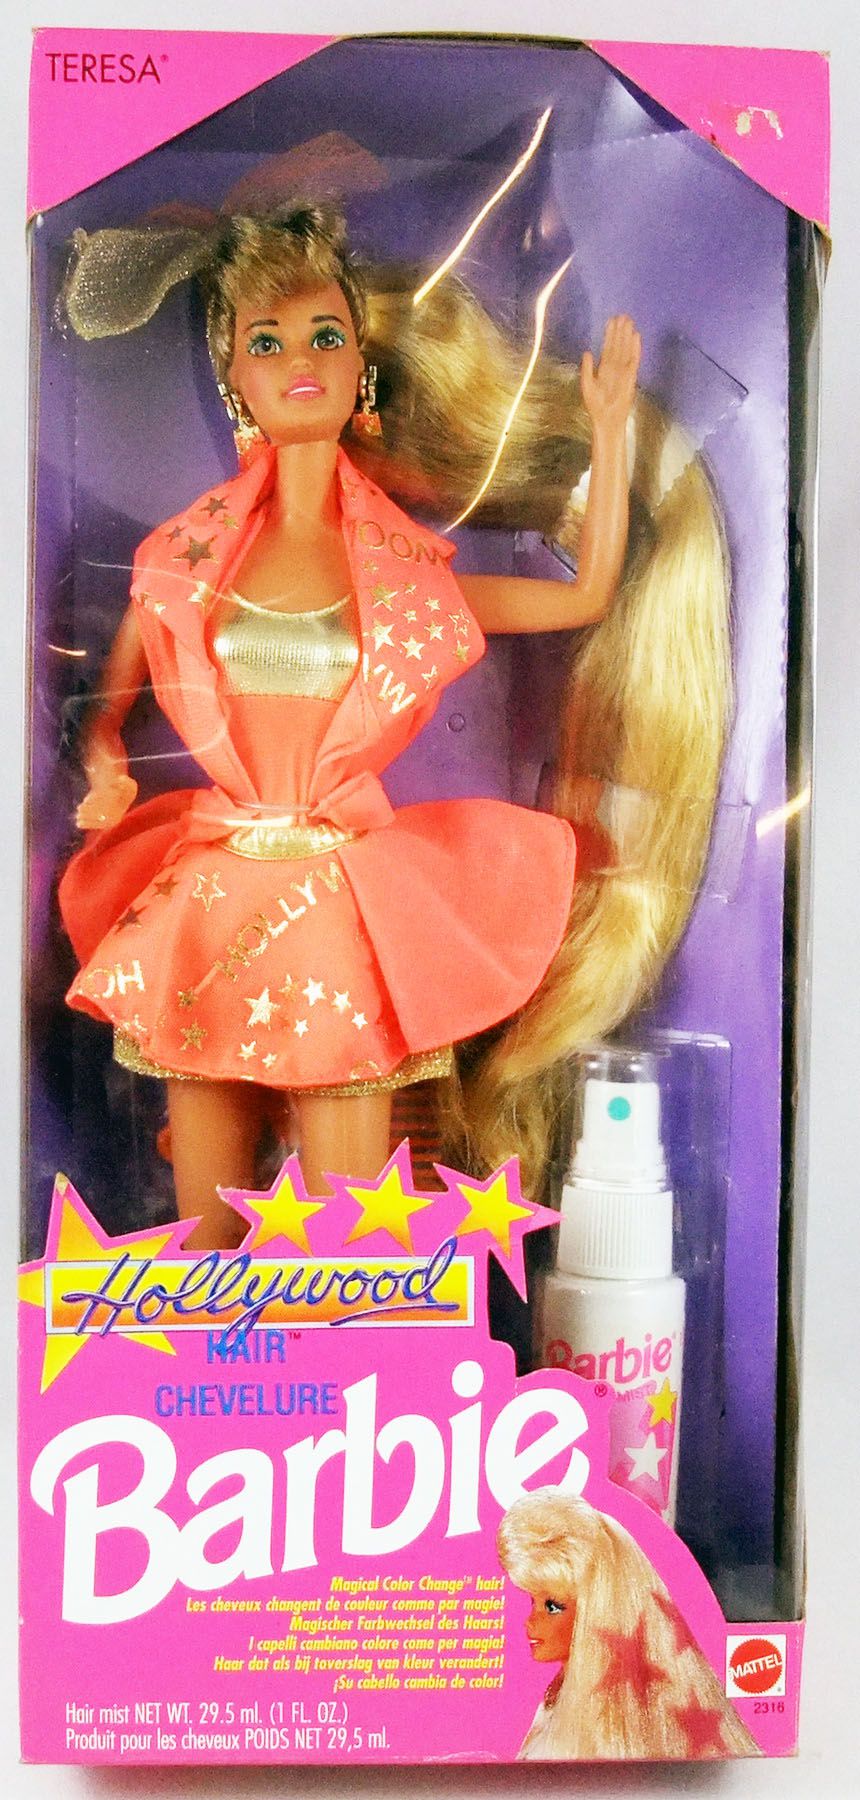 Welkom Vooruitzicht Verduisteren Barbie Hollywood Hair - Teresa - Mattel 1992 (ref. 2316)